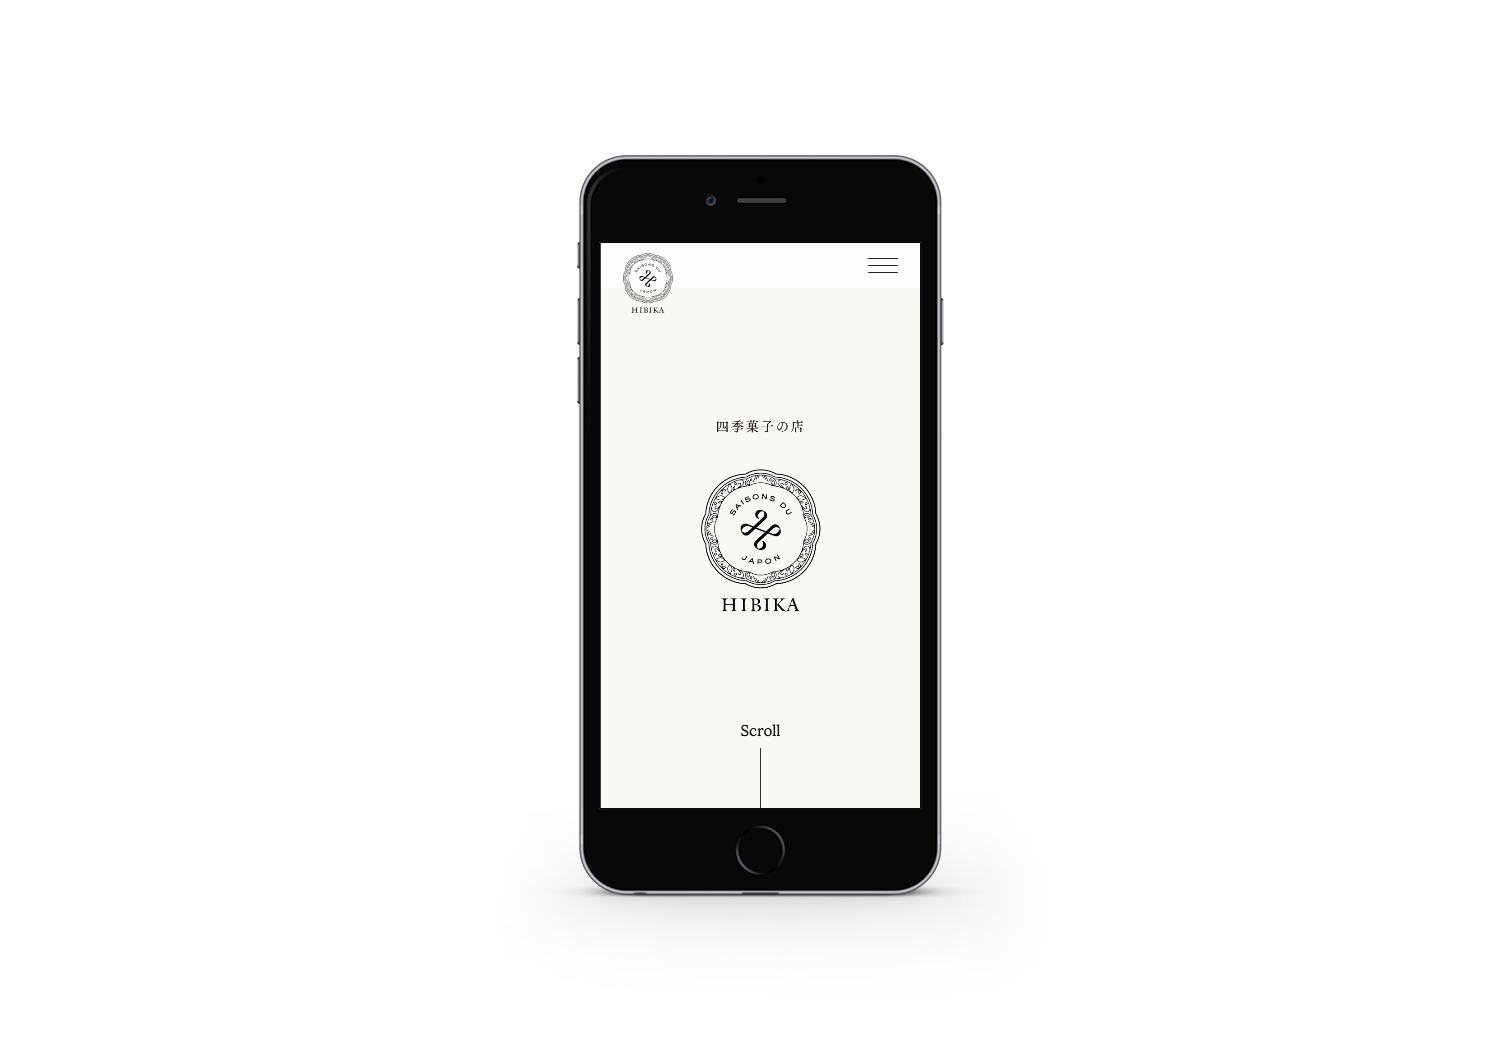 HIBIKA Official Smartphone site 2017